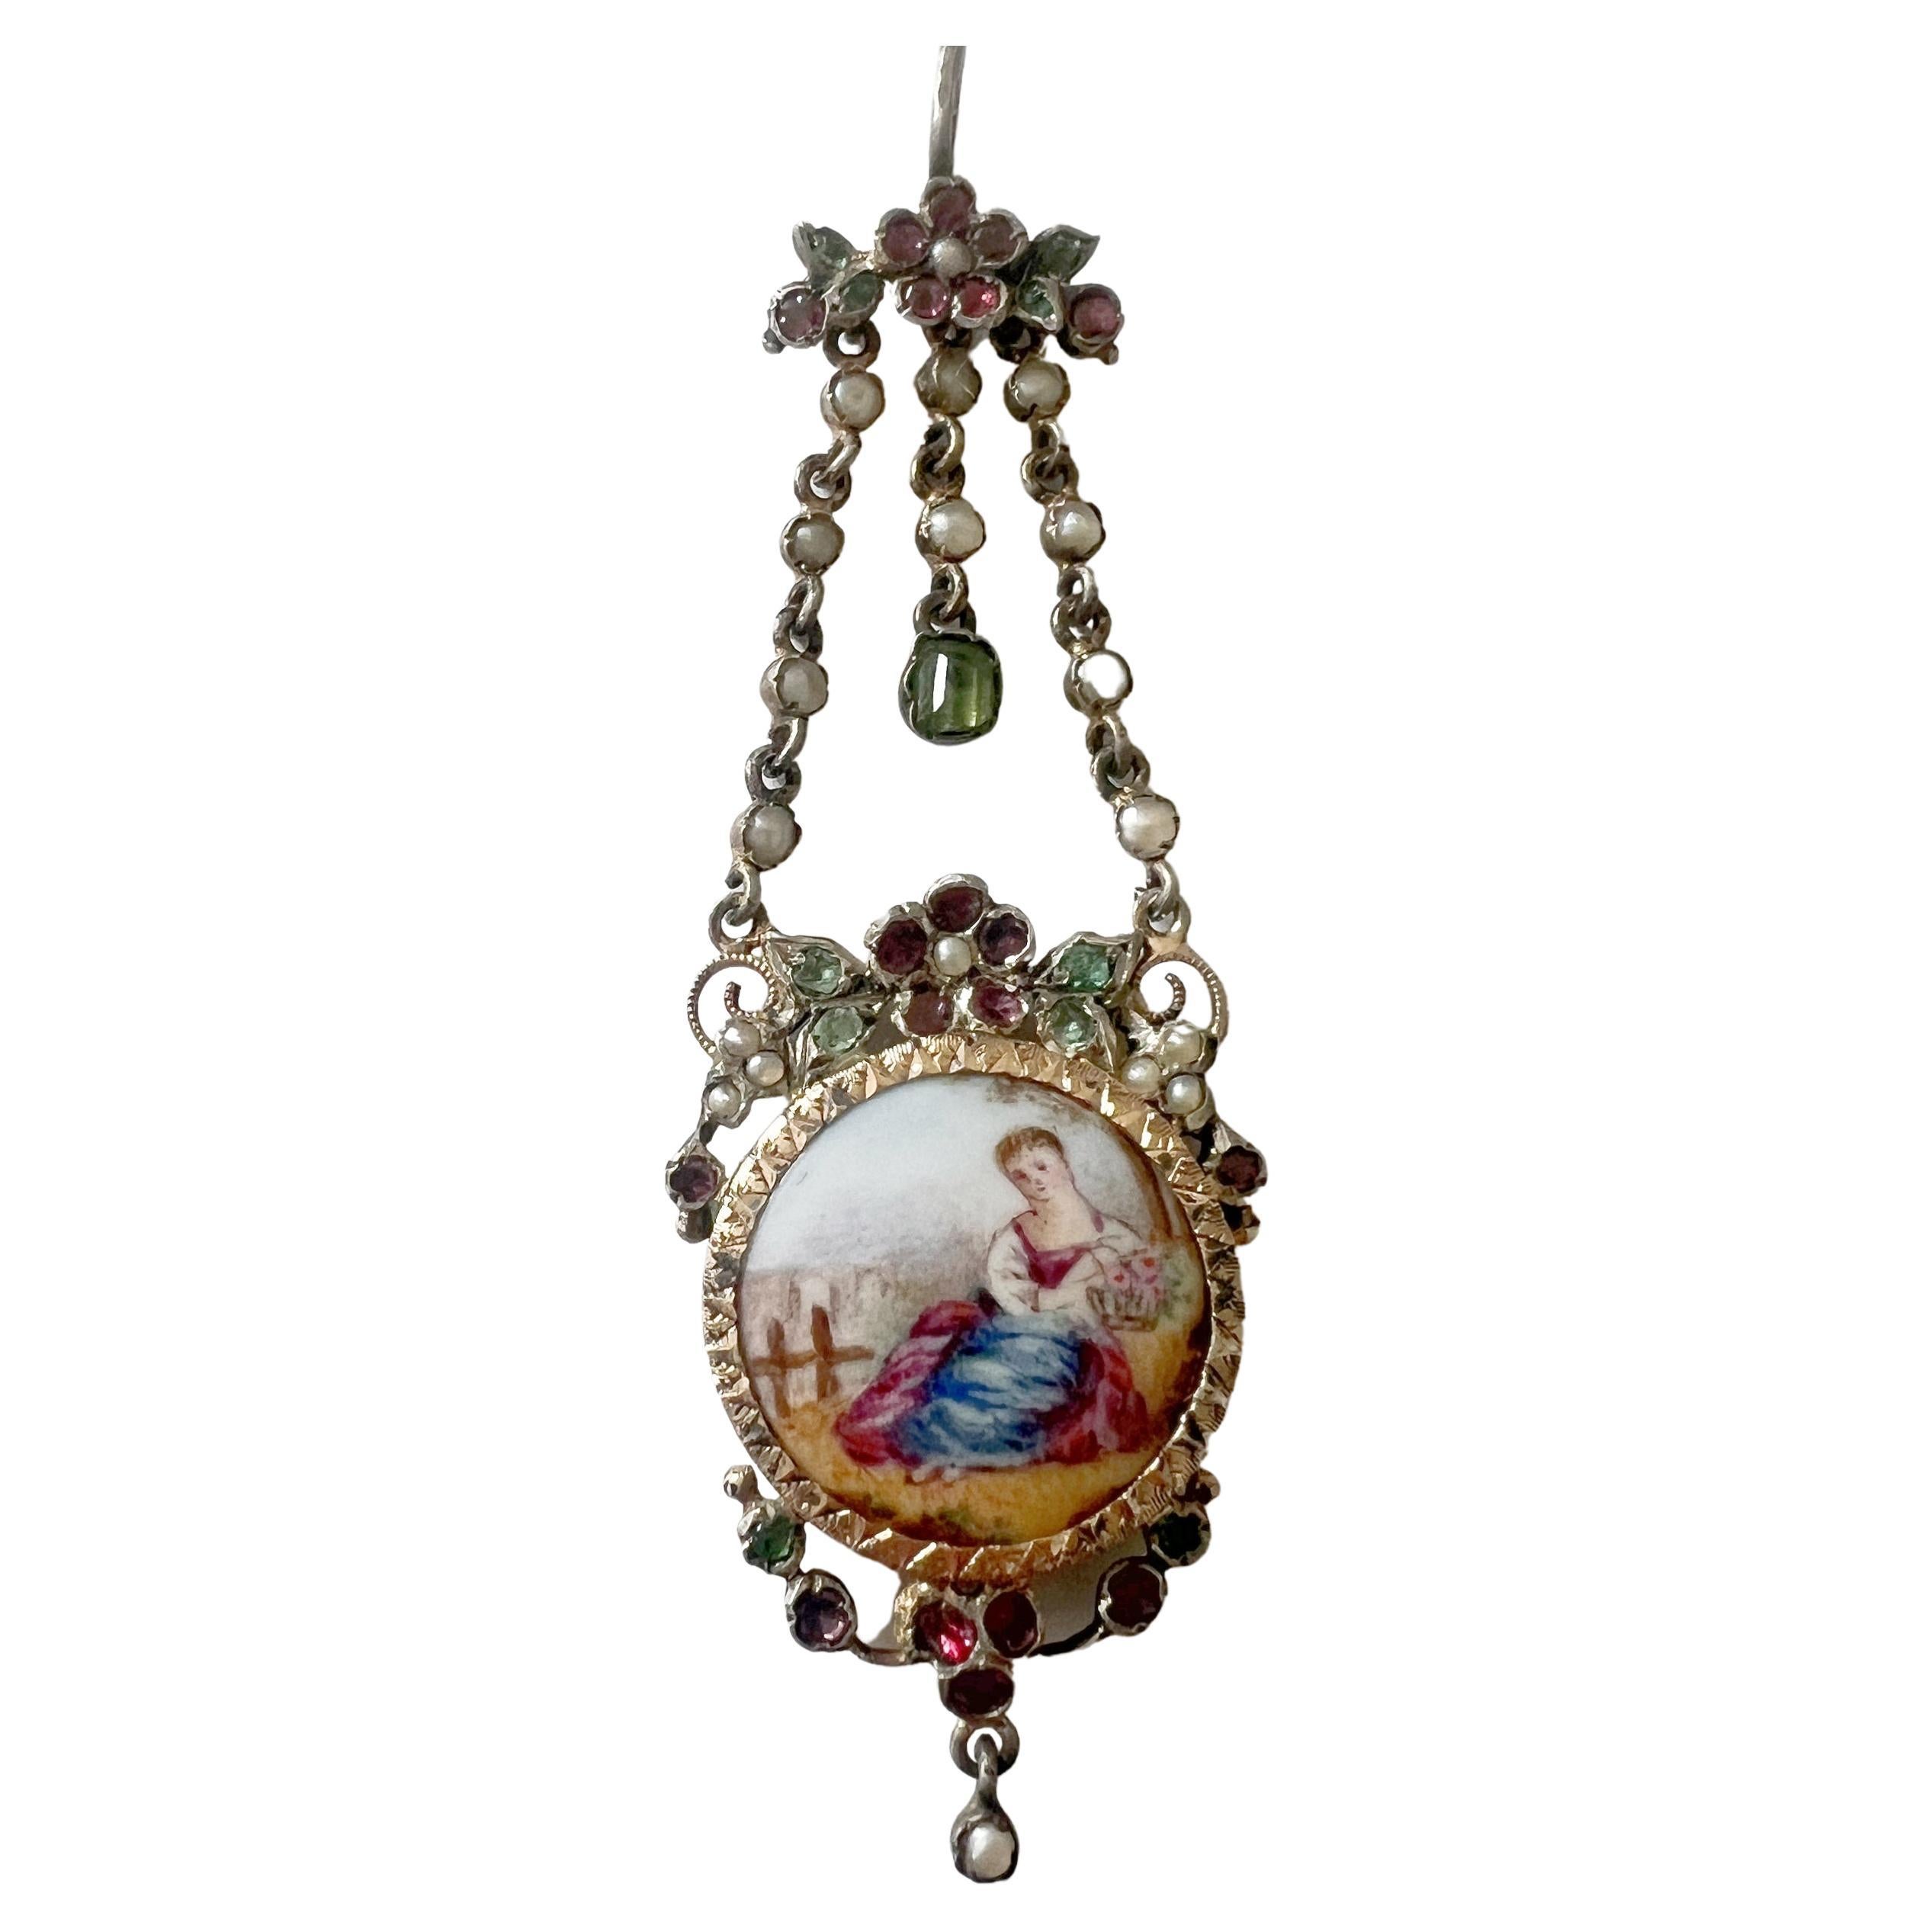 Victorian era enamel miniature portrait pendant with emeralds and garnets